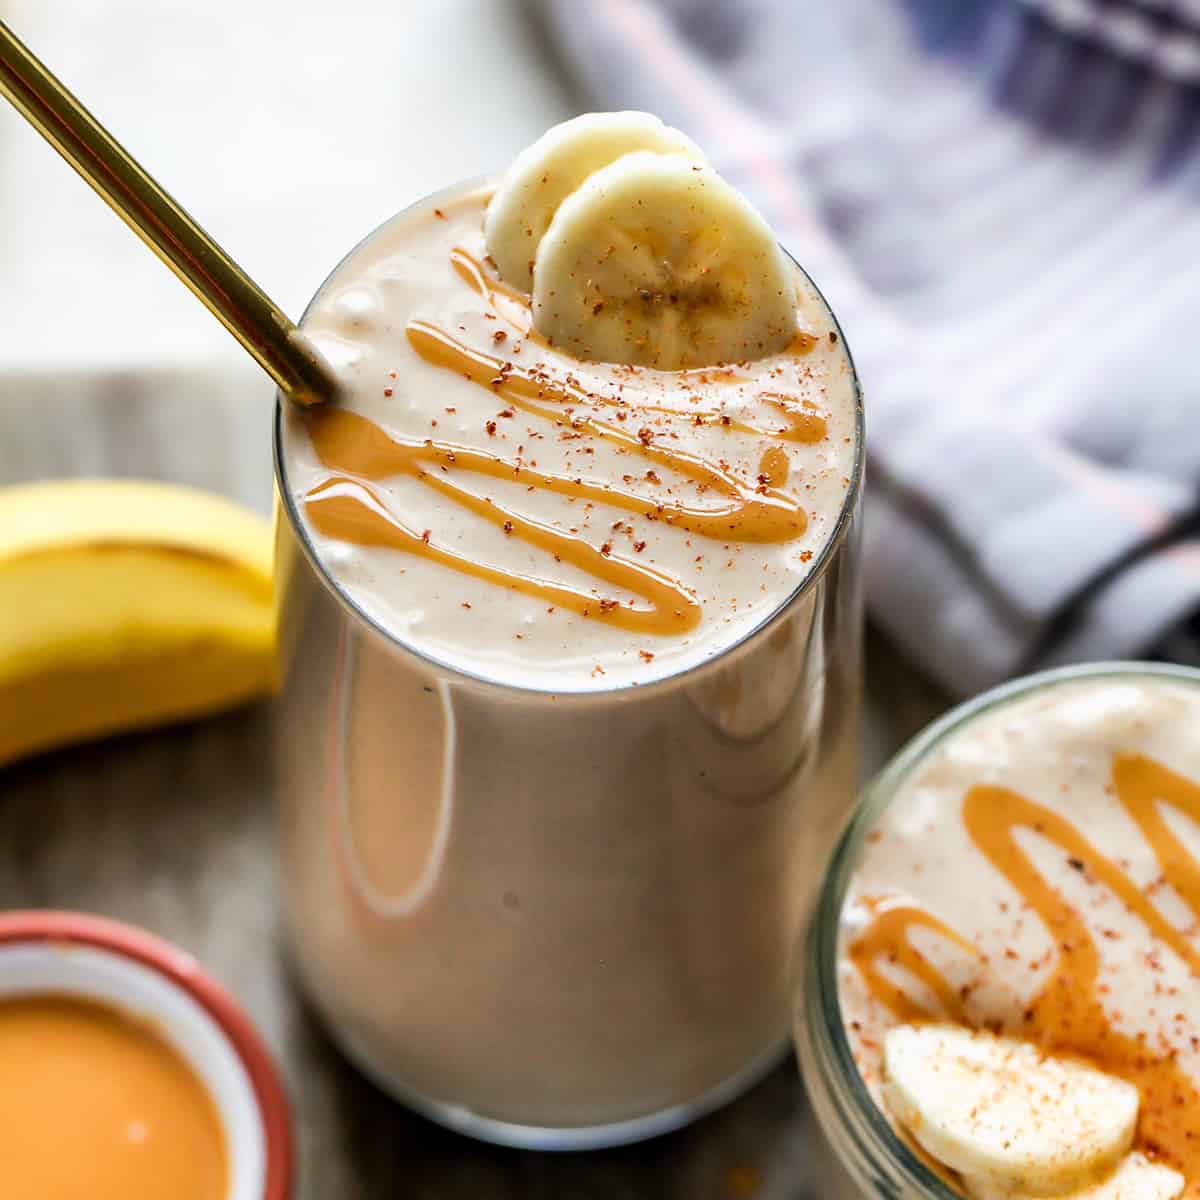 https://joyfoodsunshine.com/wp-content/uploads/2021/12/banana-peanut-butter-smoothie-recipe-3.jpg